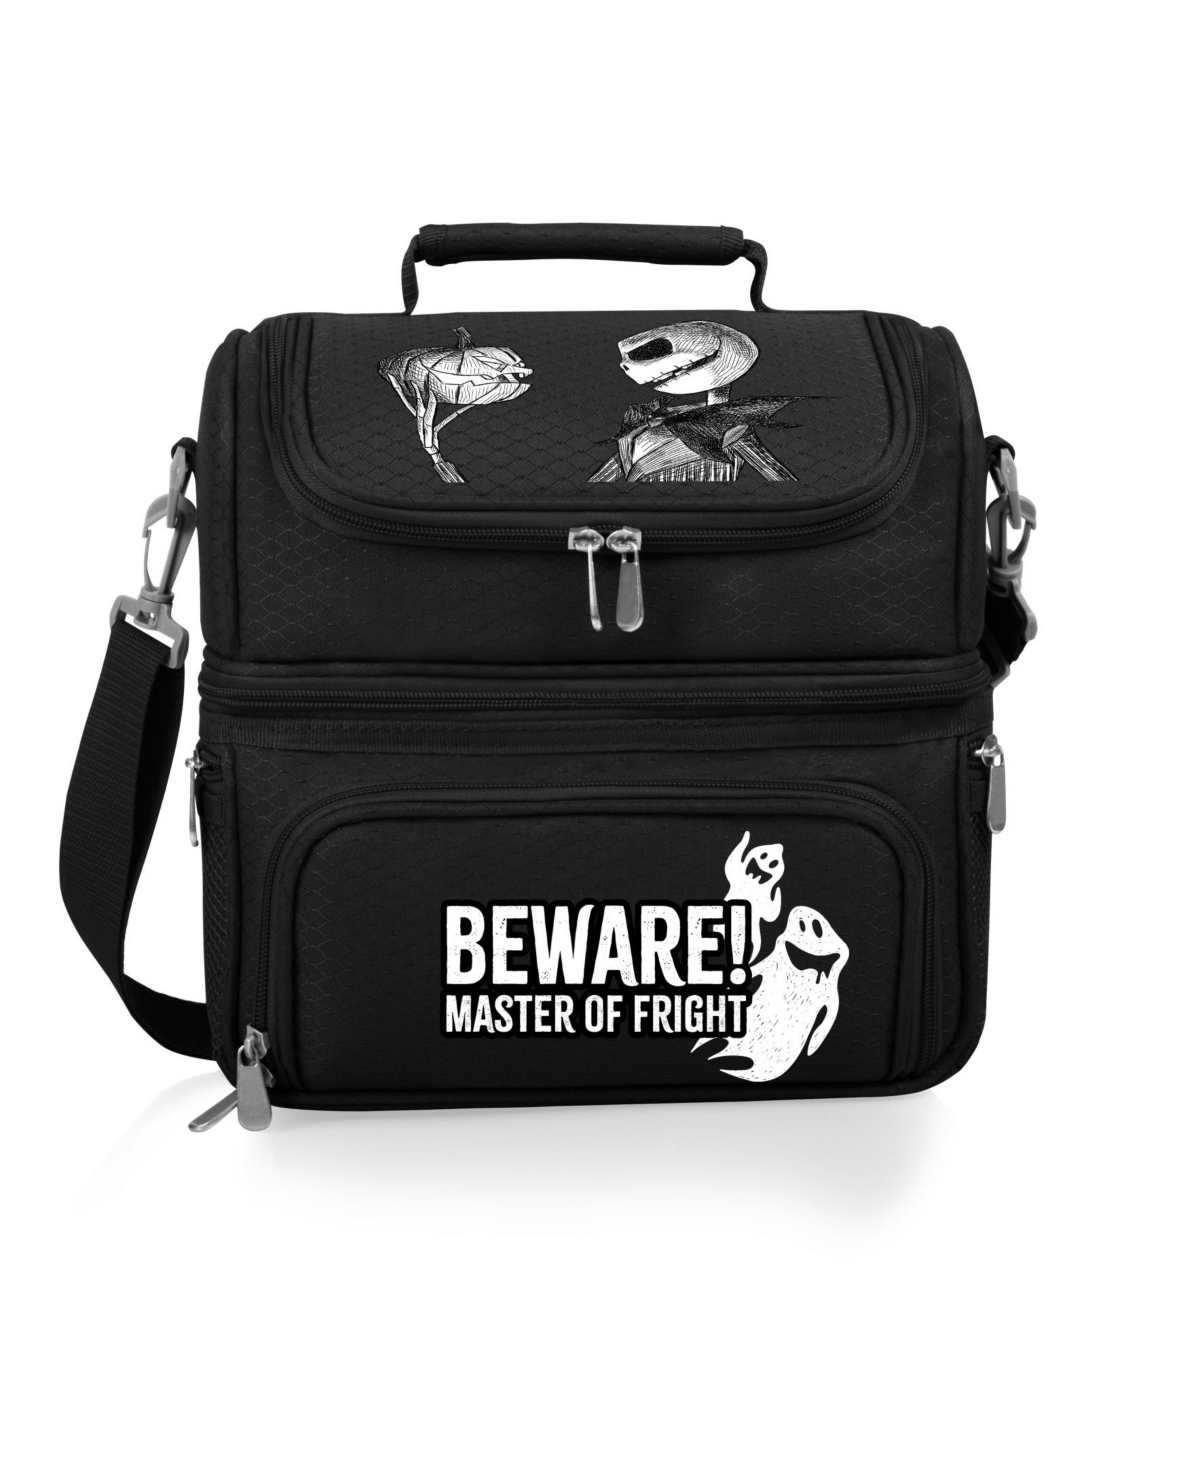 Disney's Nightmare Before Christmas Pranzo Lunch Cooler Bag, Set of 7 - Black